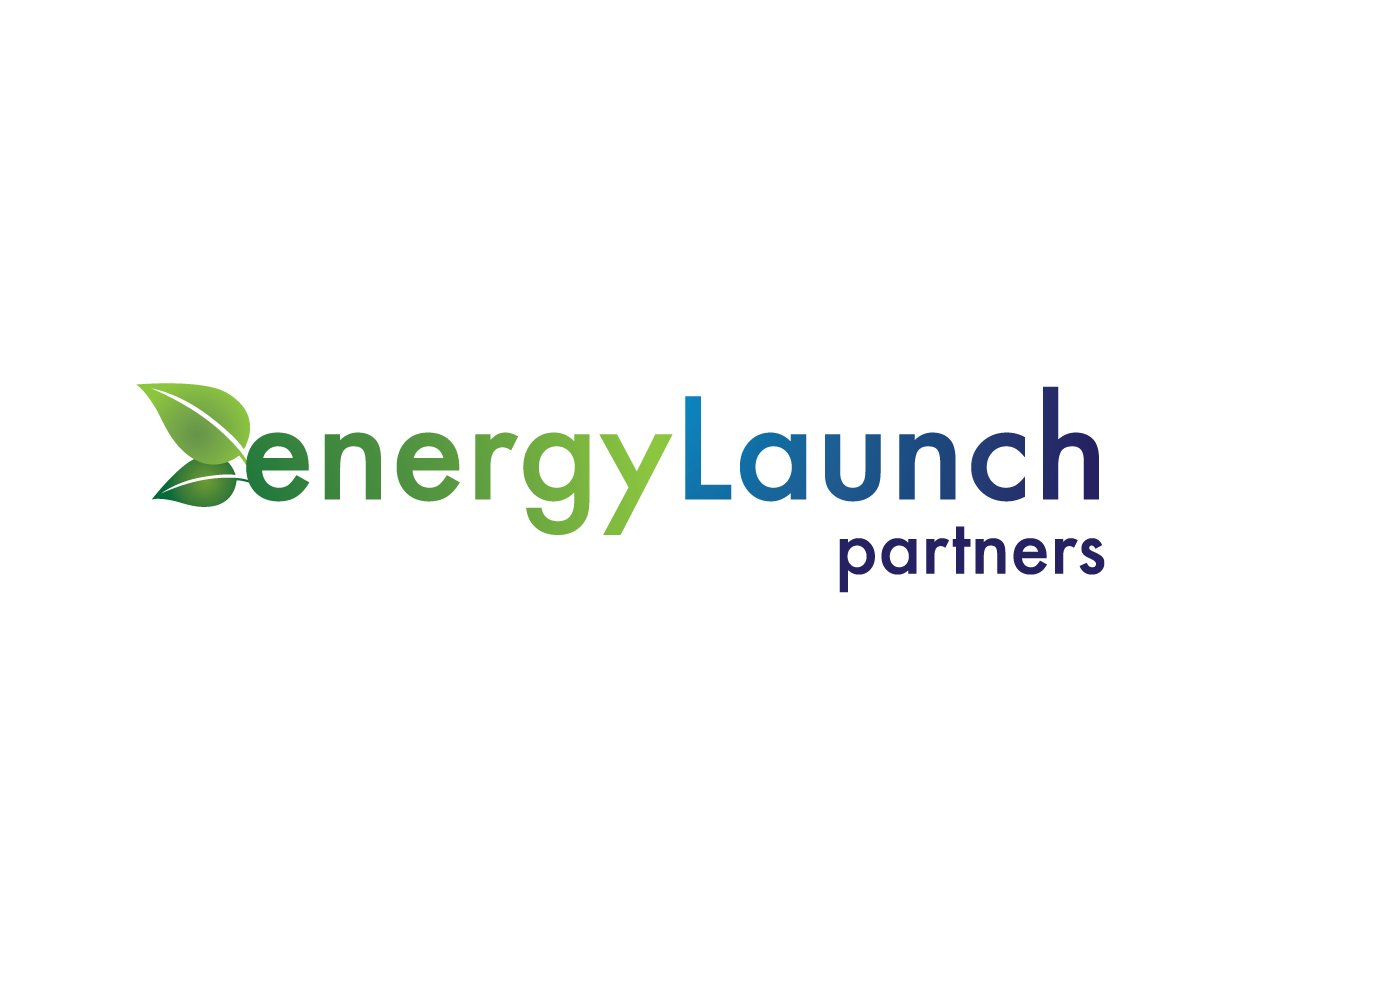 Energy Launch Partners